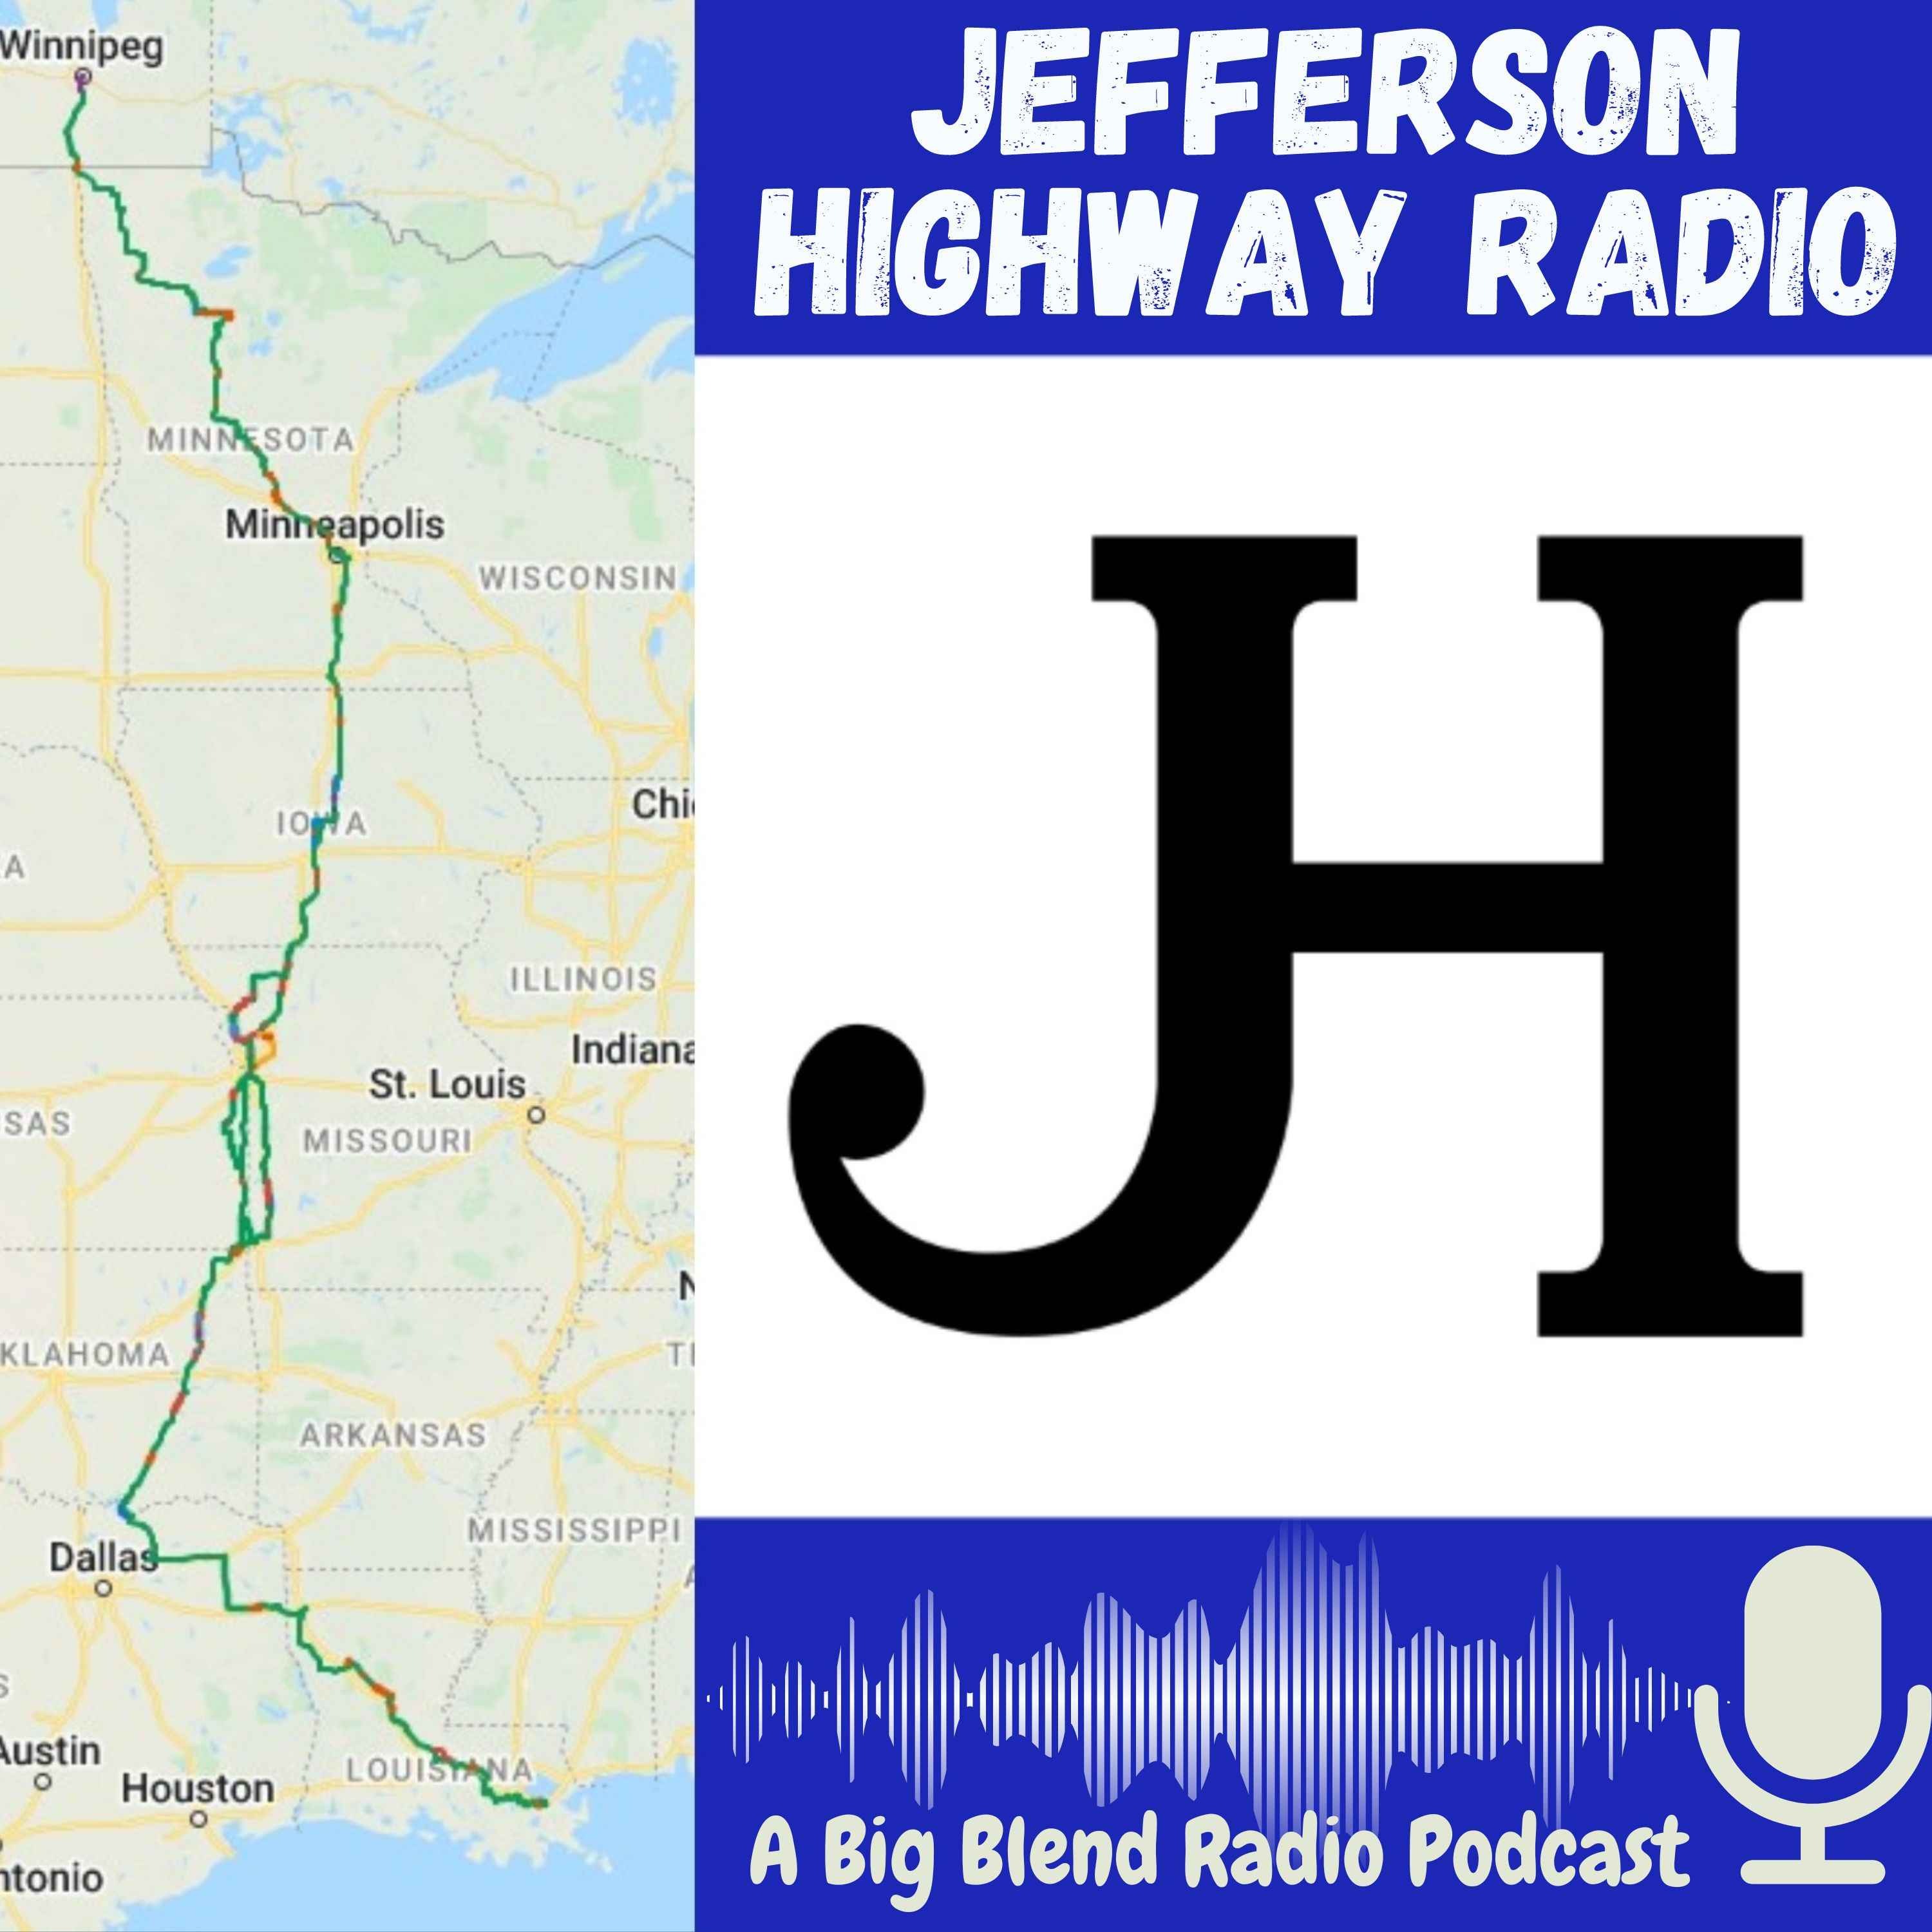 Historic Jefferson Highway